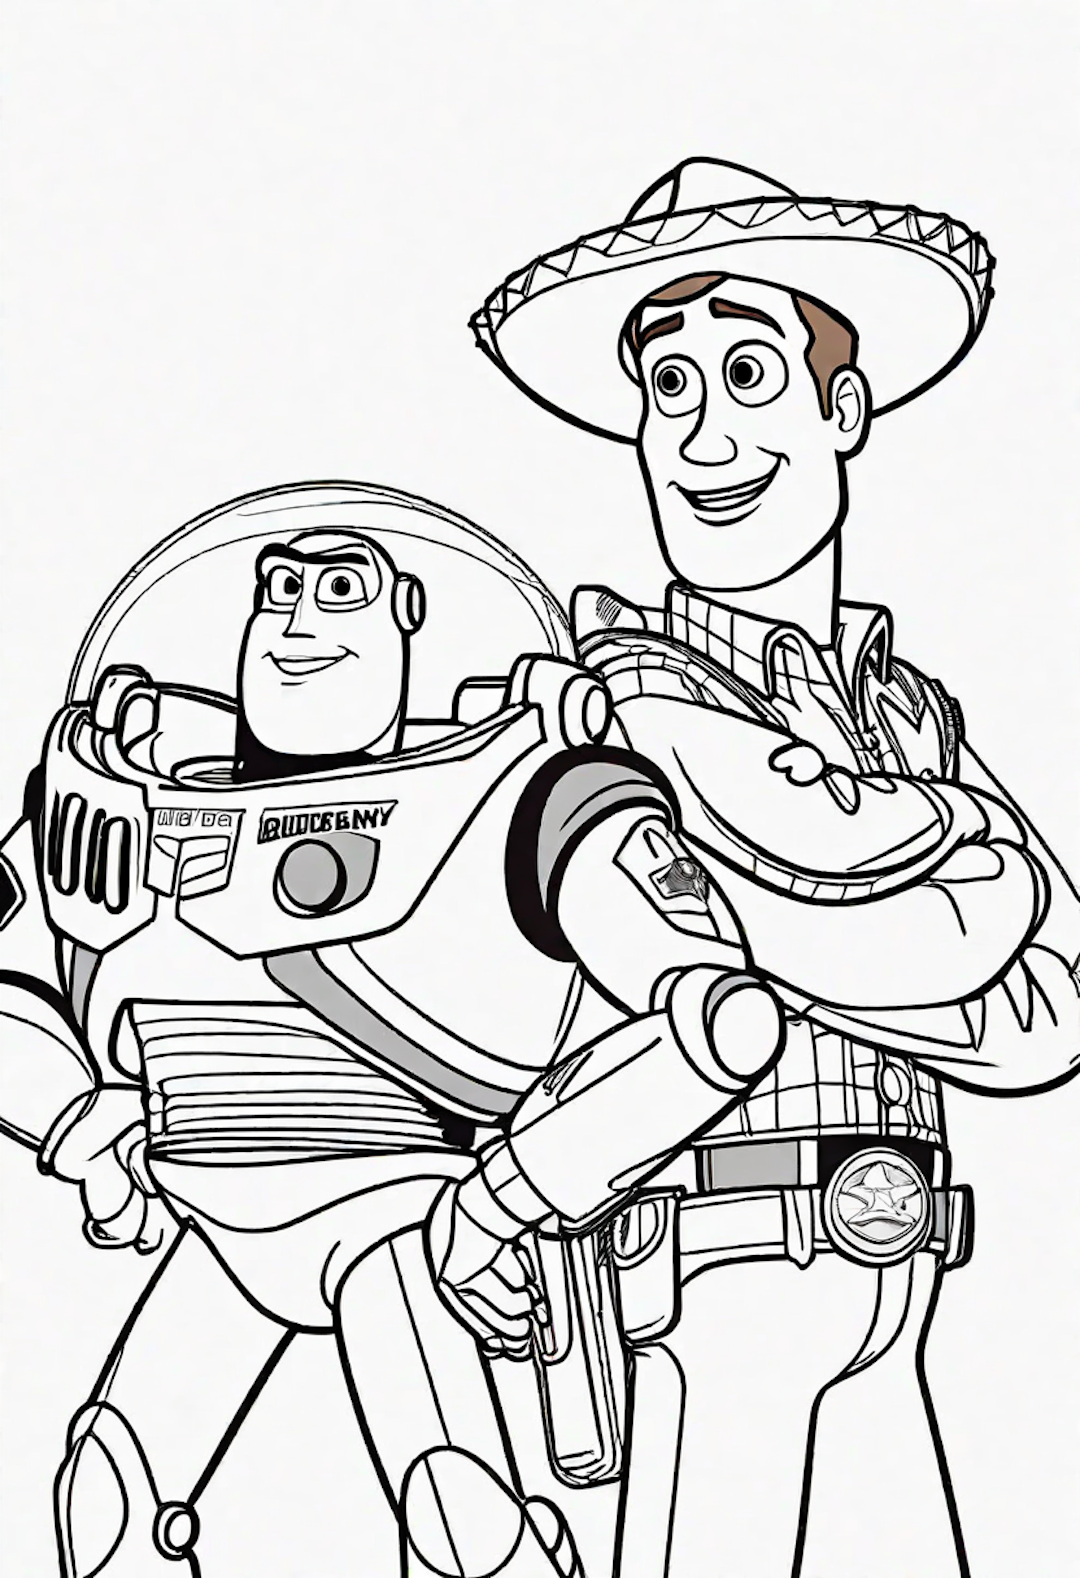 Buzz Lightyear Talking To Woody